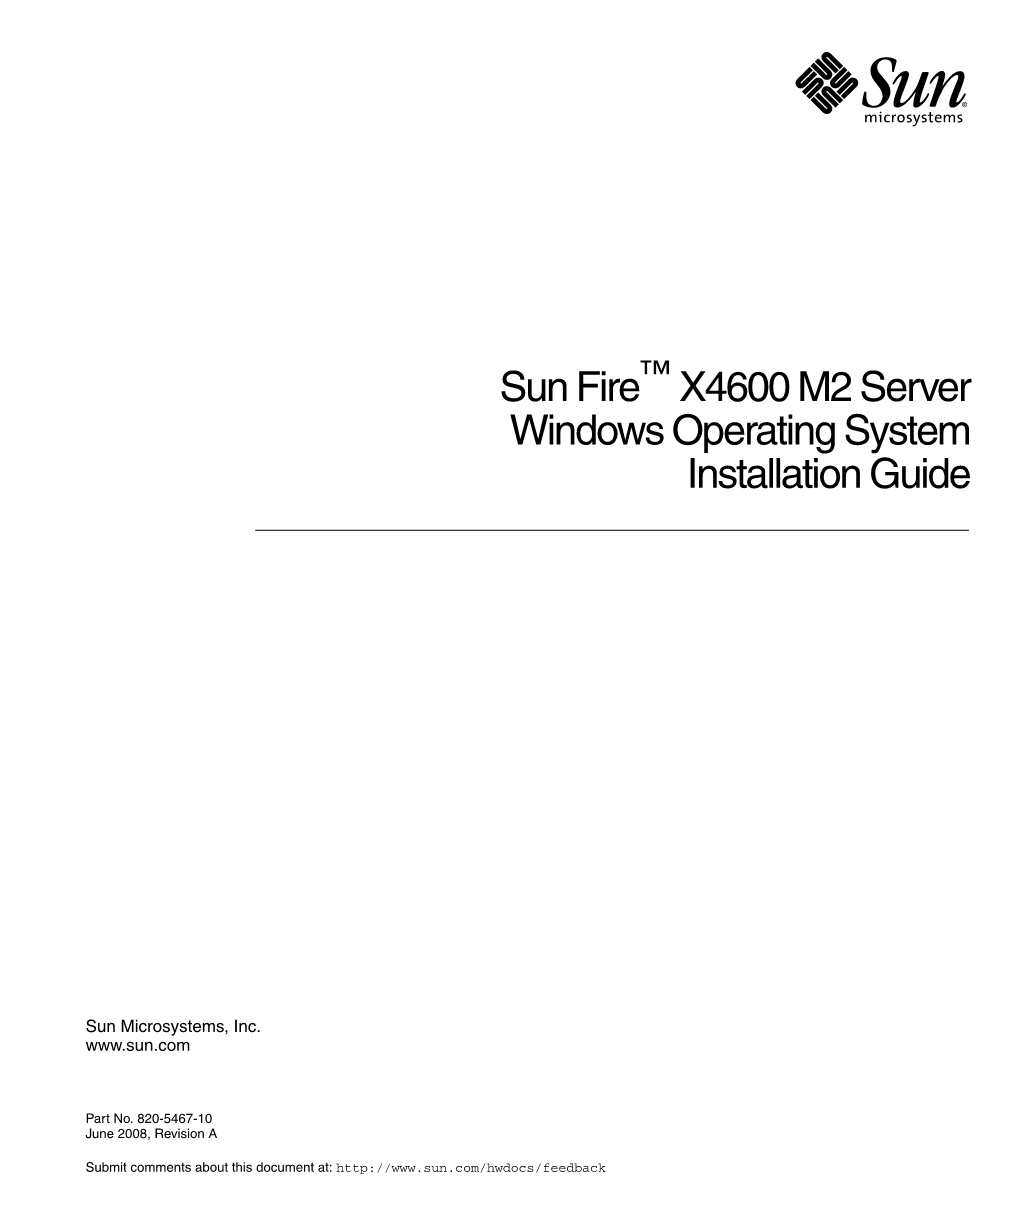 Sun Fire X4600 M2 Server Windows Operating System Installation Guide